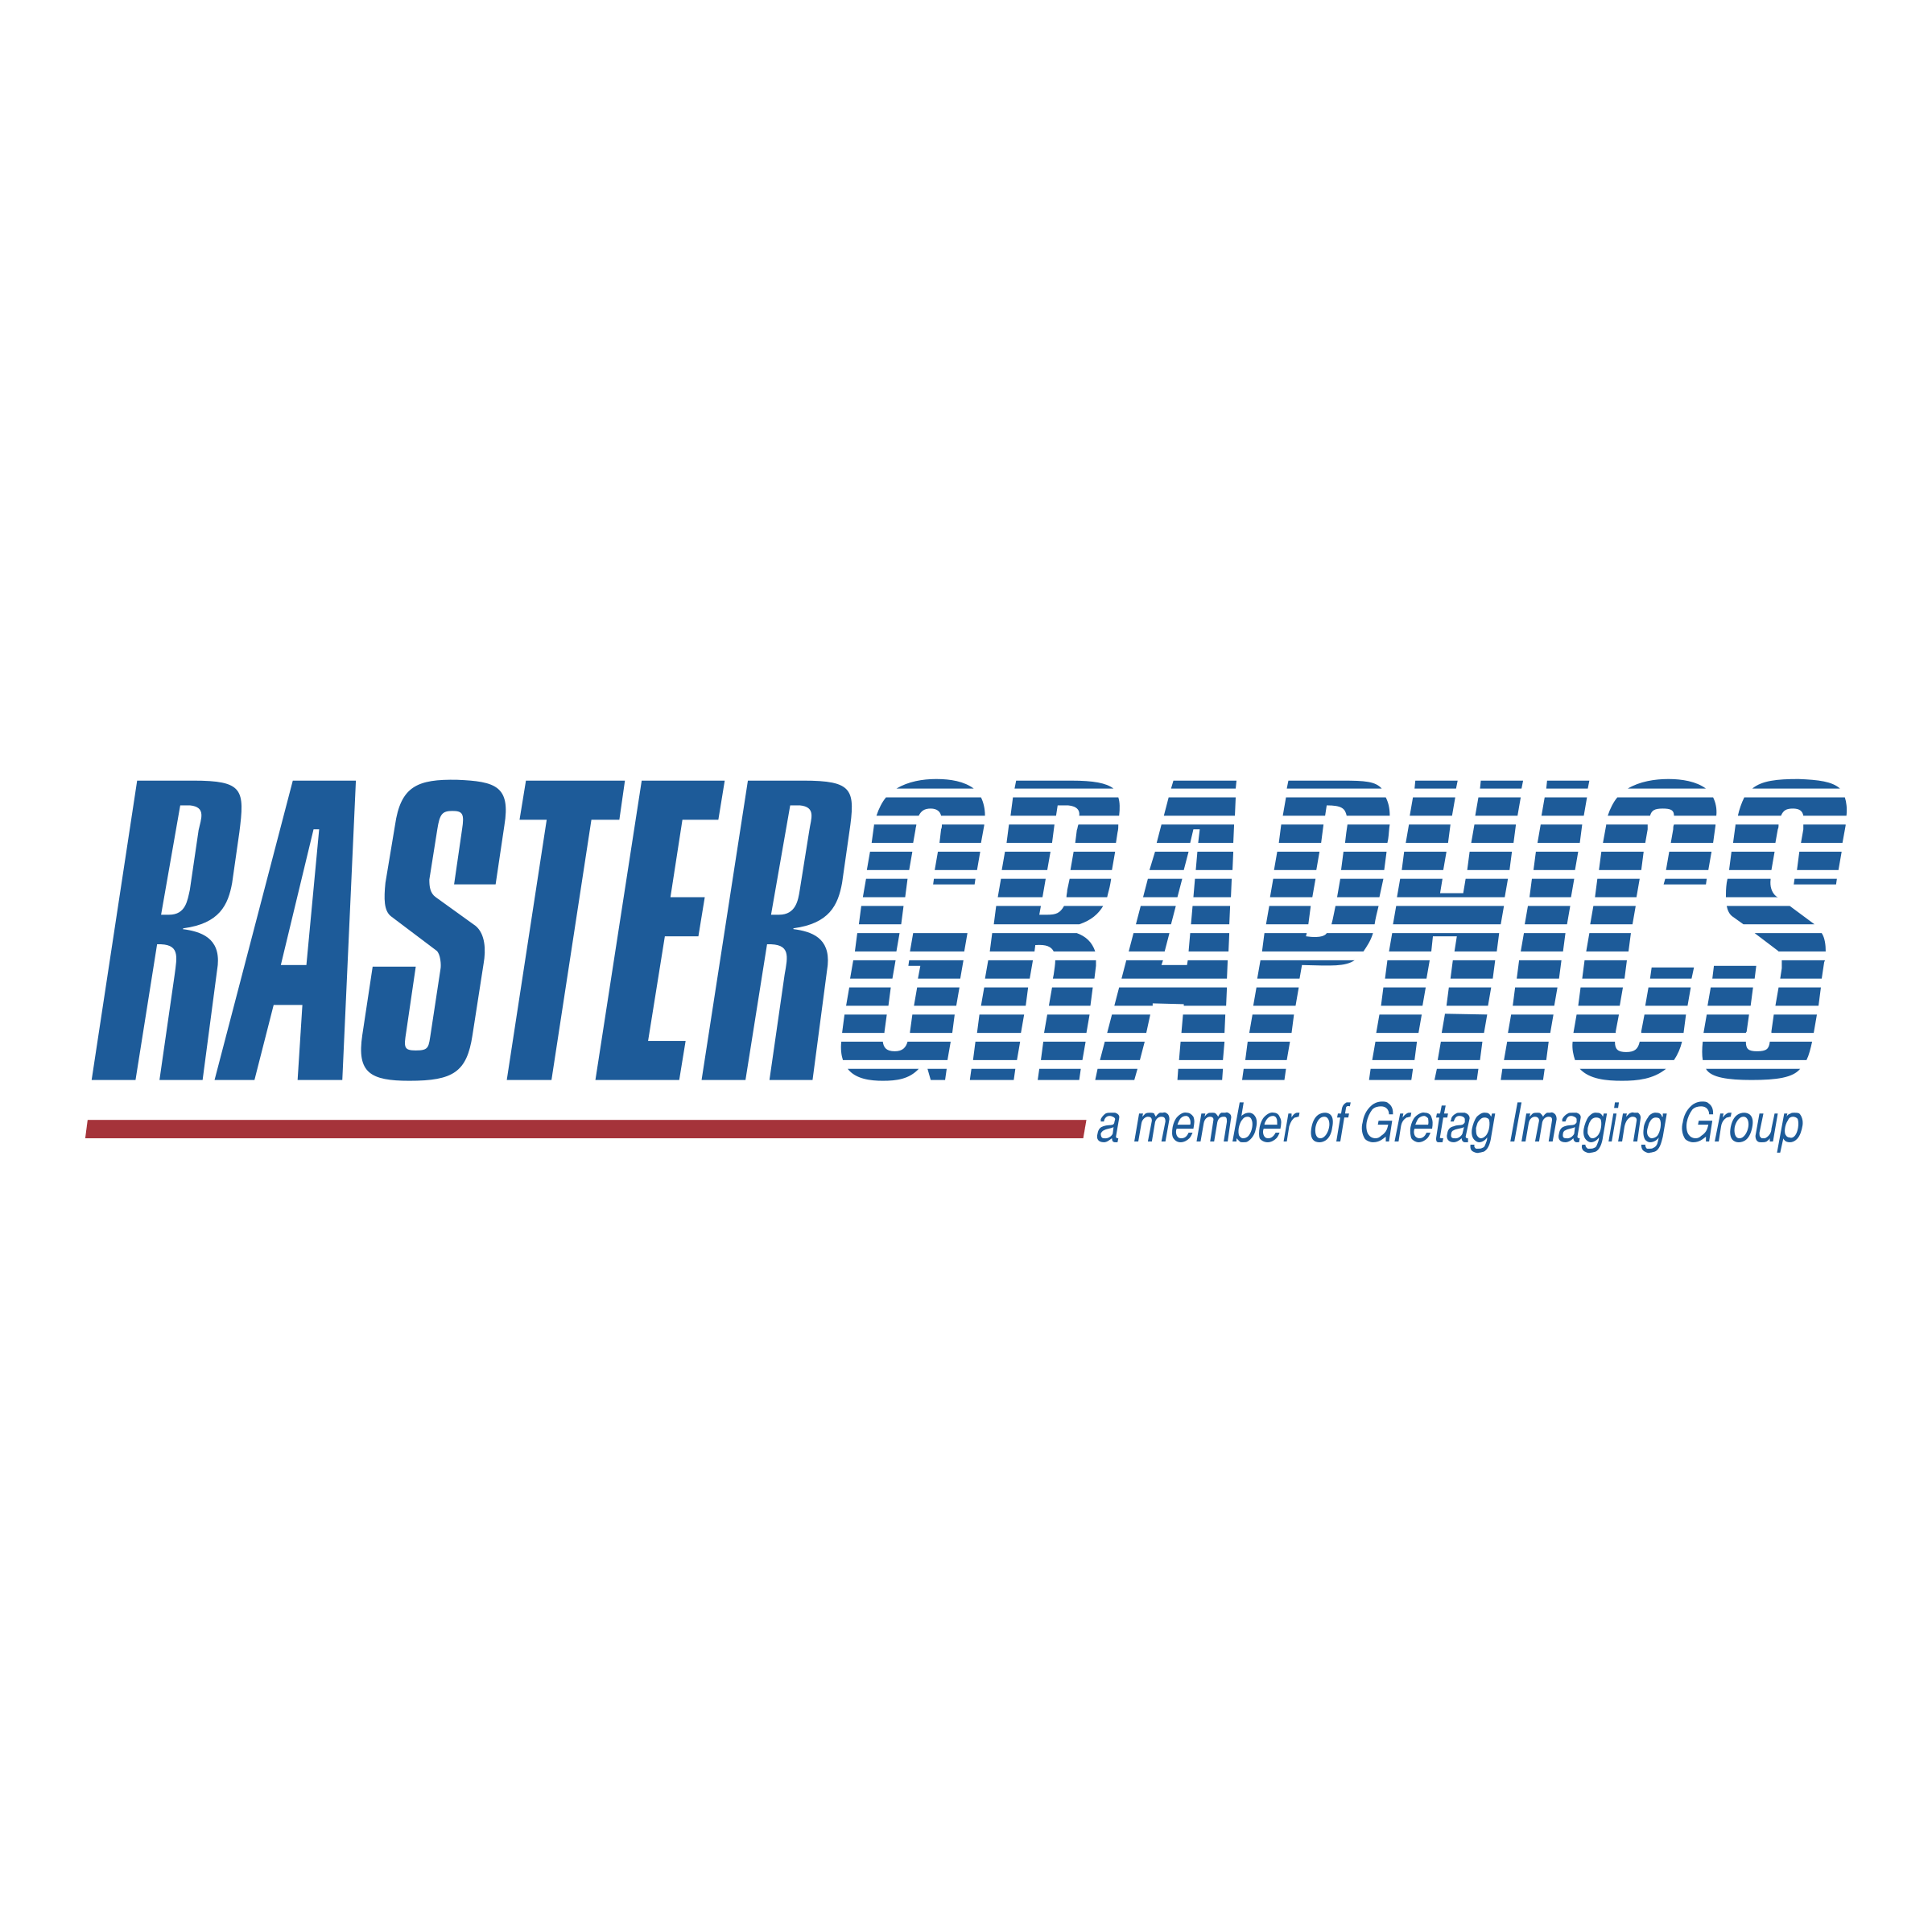 Raster Logo - Raster Graphics Logo PNG Transparent & SVG Vector - Freebie Supply